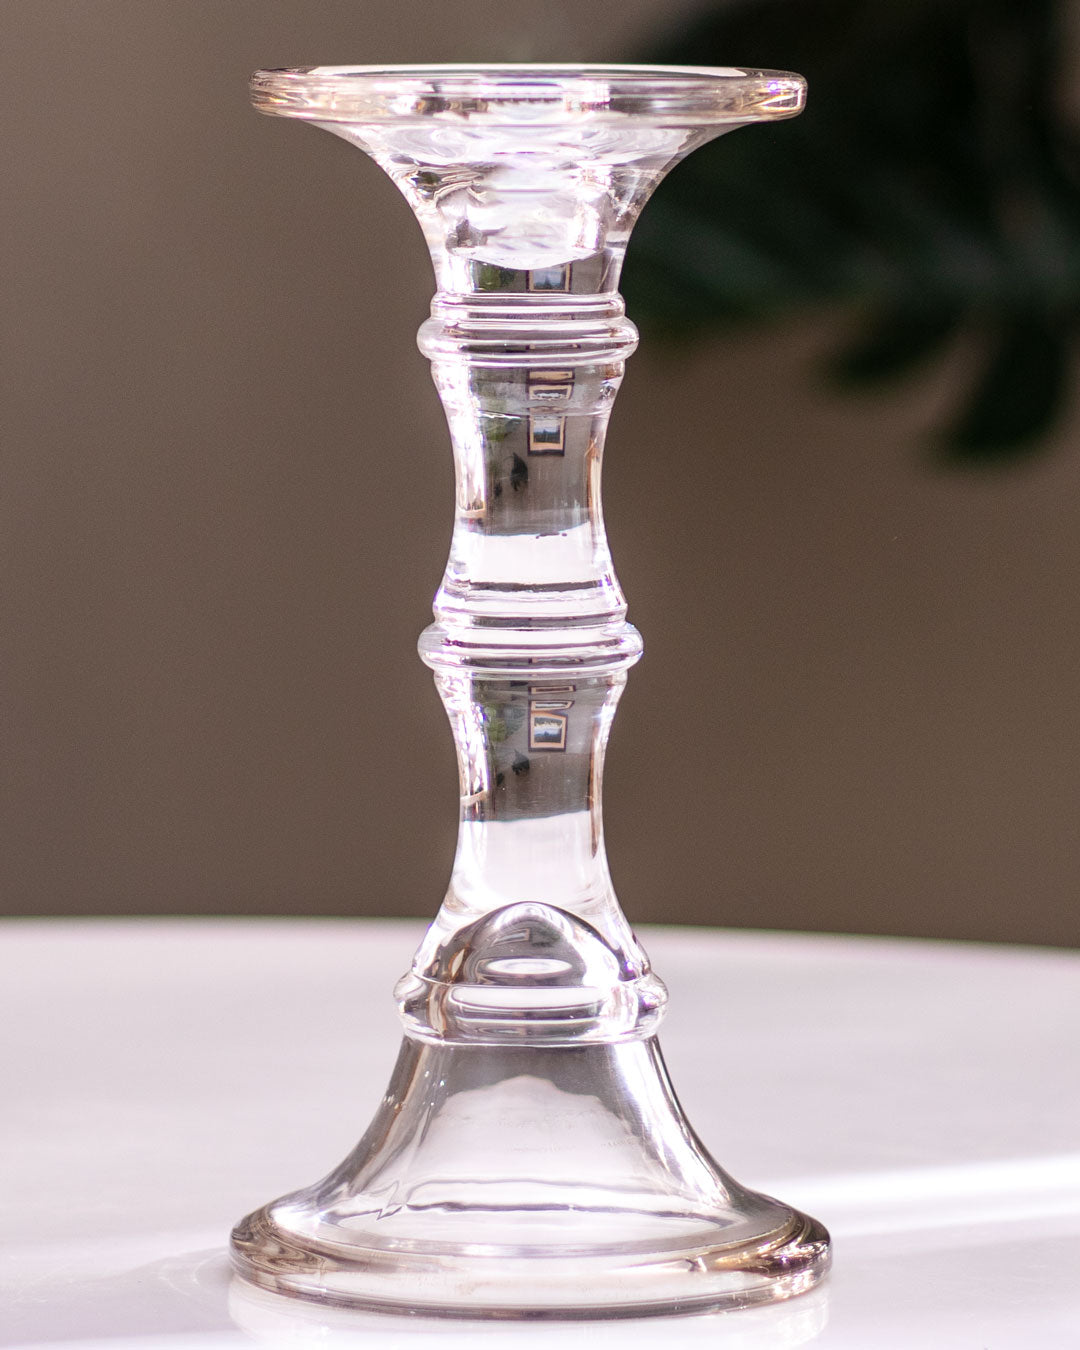 Sleek and Stylish Glass Candle Stand - Large